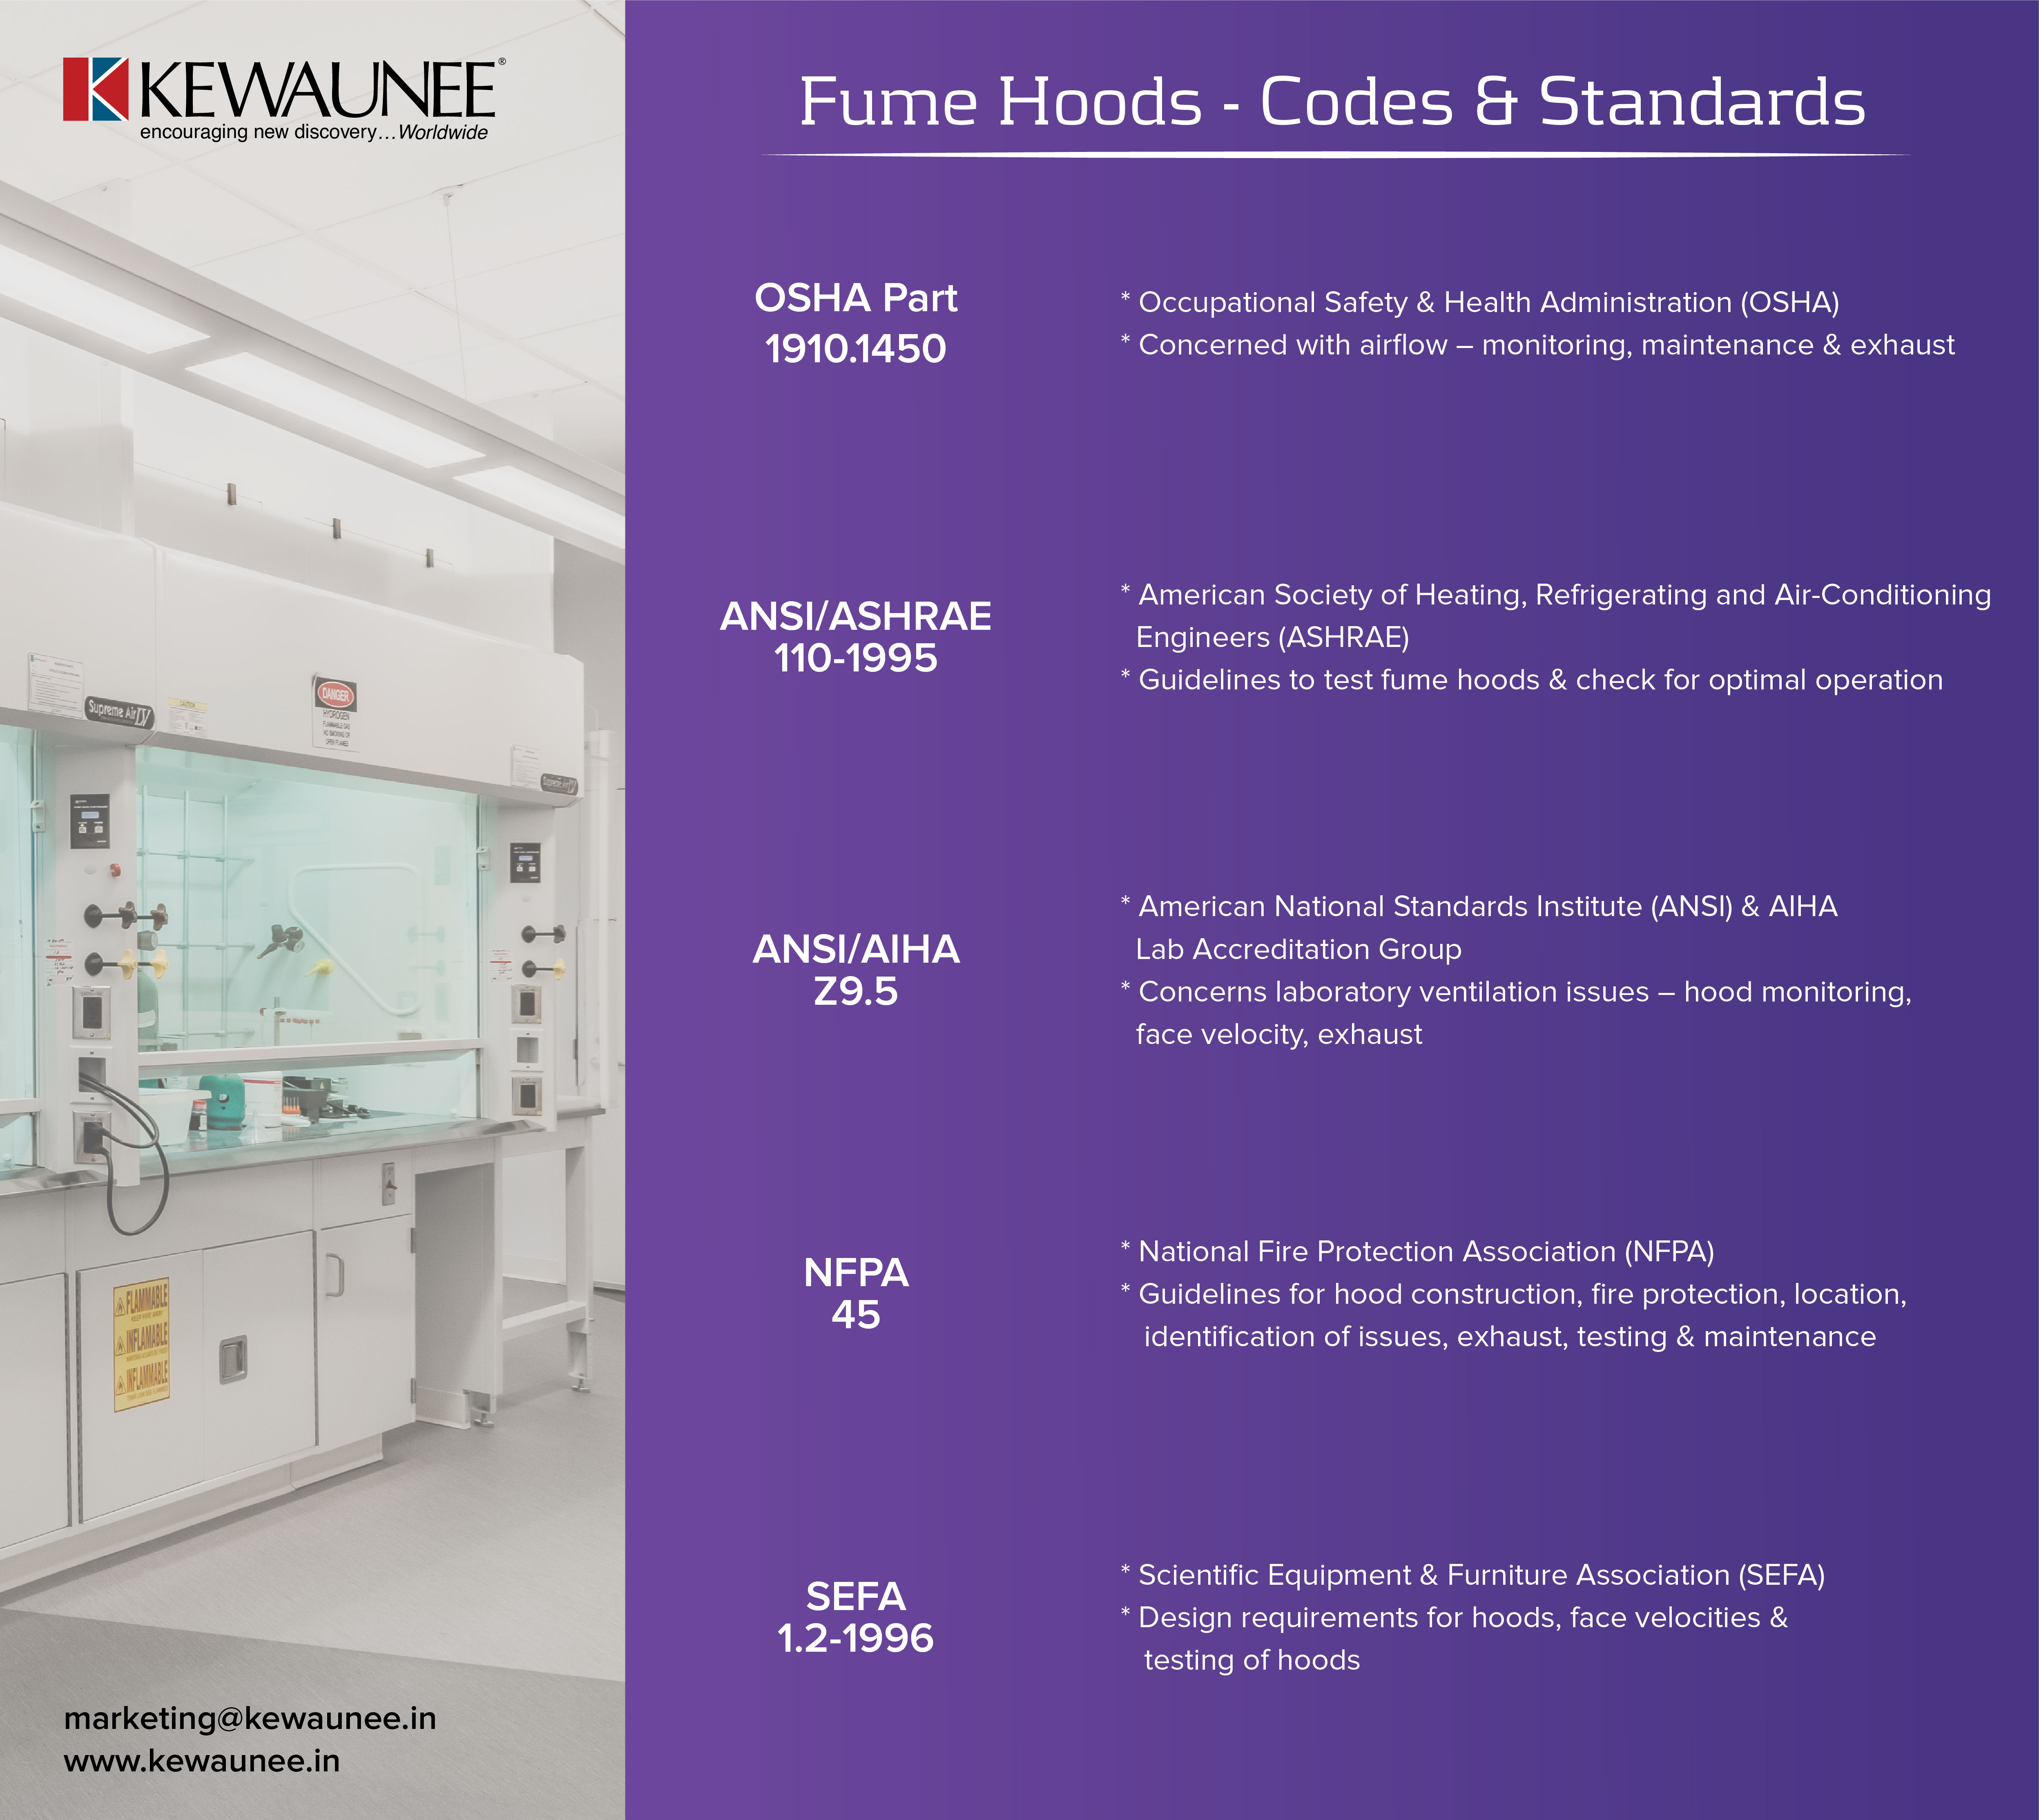 Fume Hoods - Codes & Standards